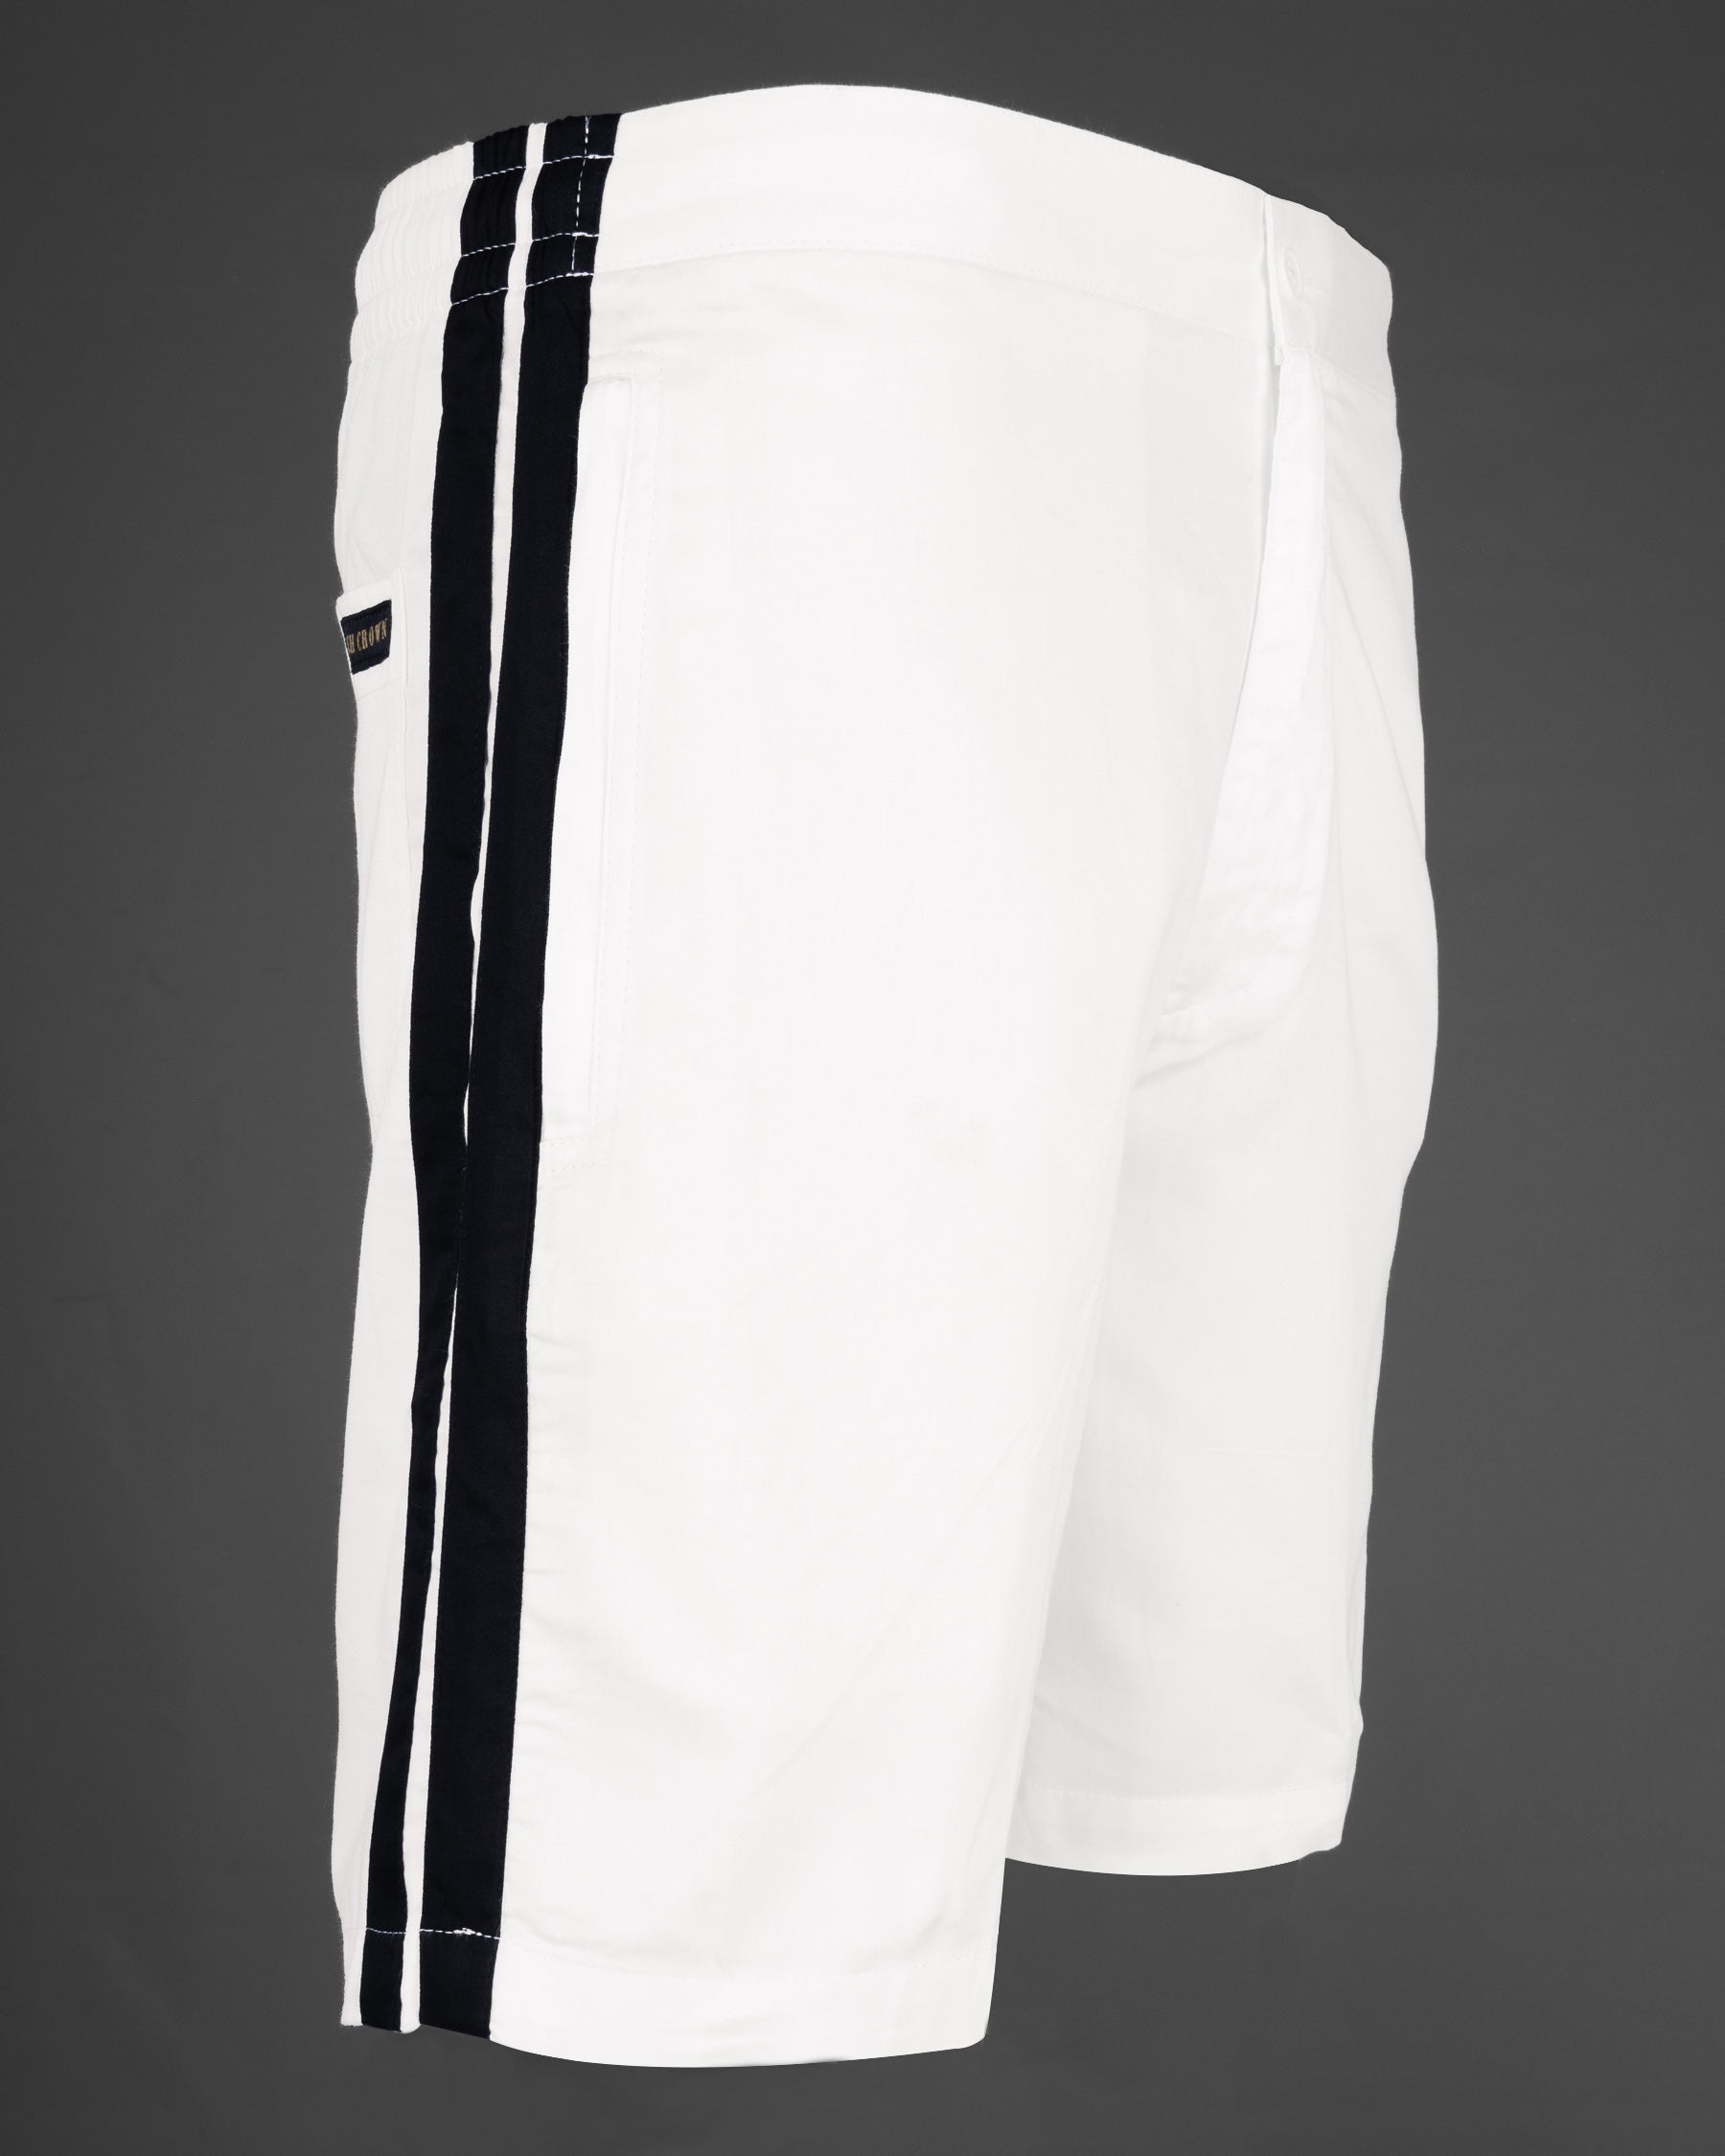 Jade Black and Bright White Contrast Striped Super Soft Premium Cotton Designer Shorts SR145-28, SR145-30, SR145-32, SR145-34, SR145-36, SR145-38, SR145-40, SR145-42, SR145-44